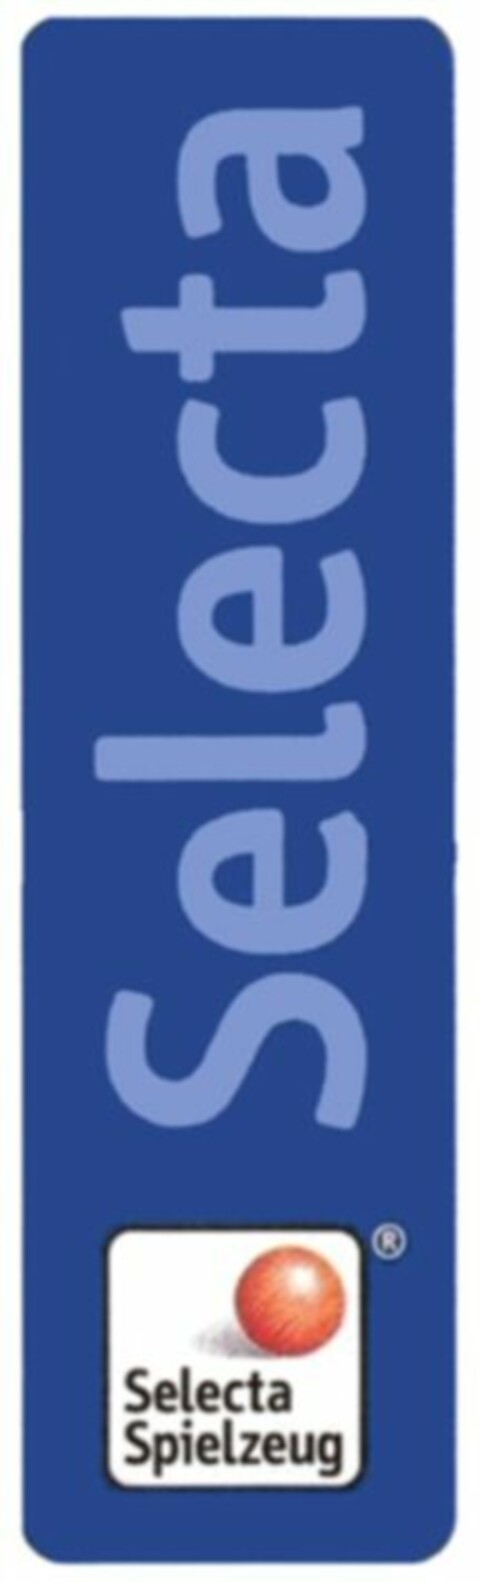 Selecta Spielzeug Logo (WIPO, 05/18/2010)